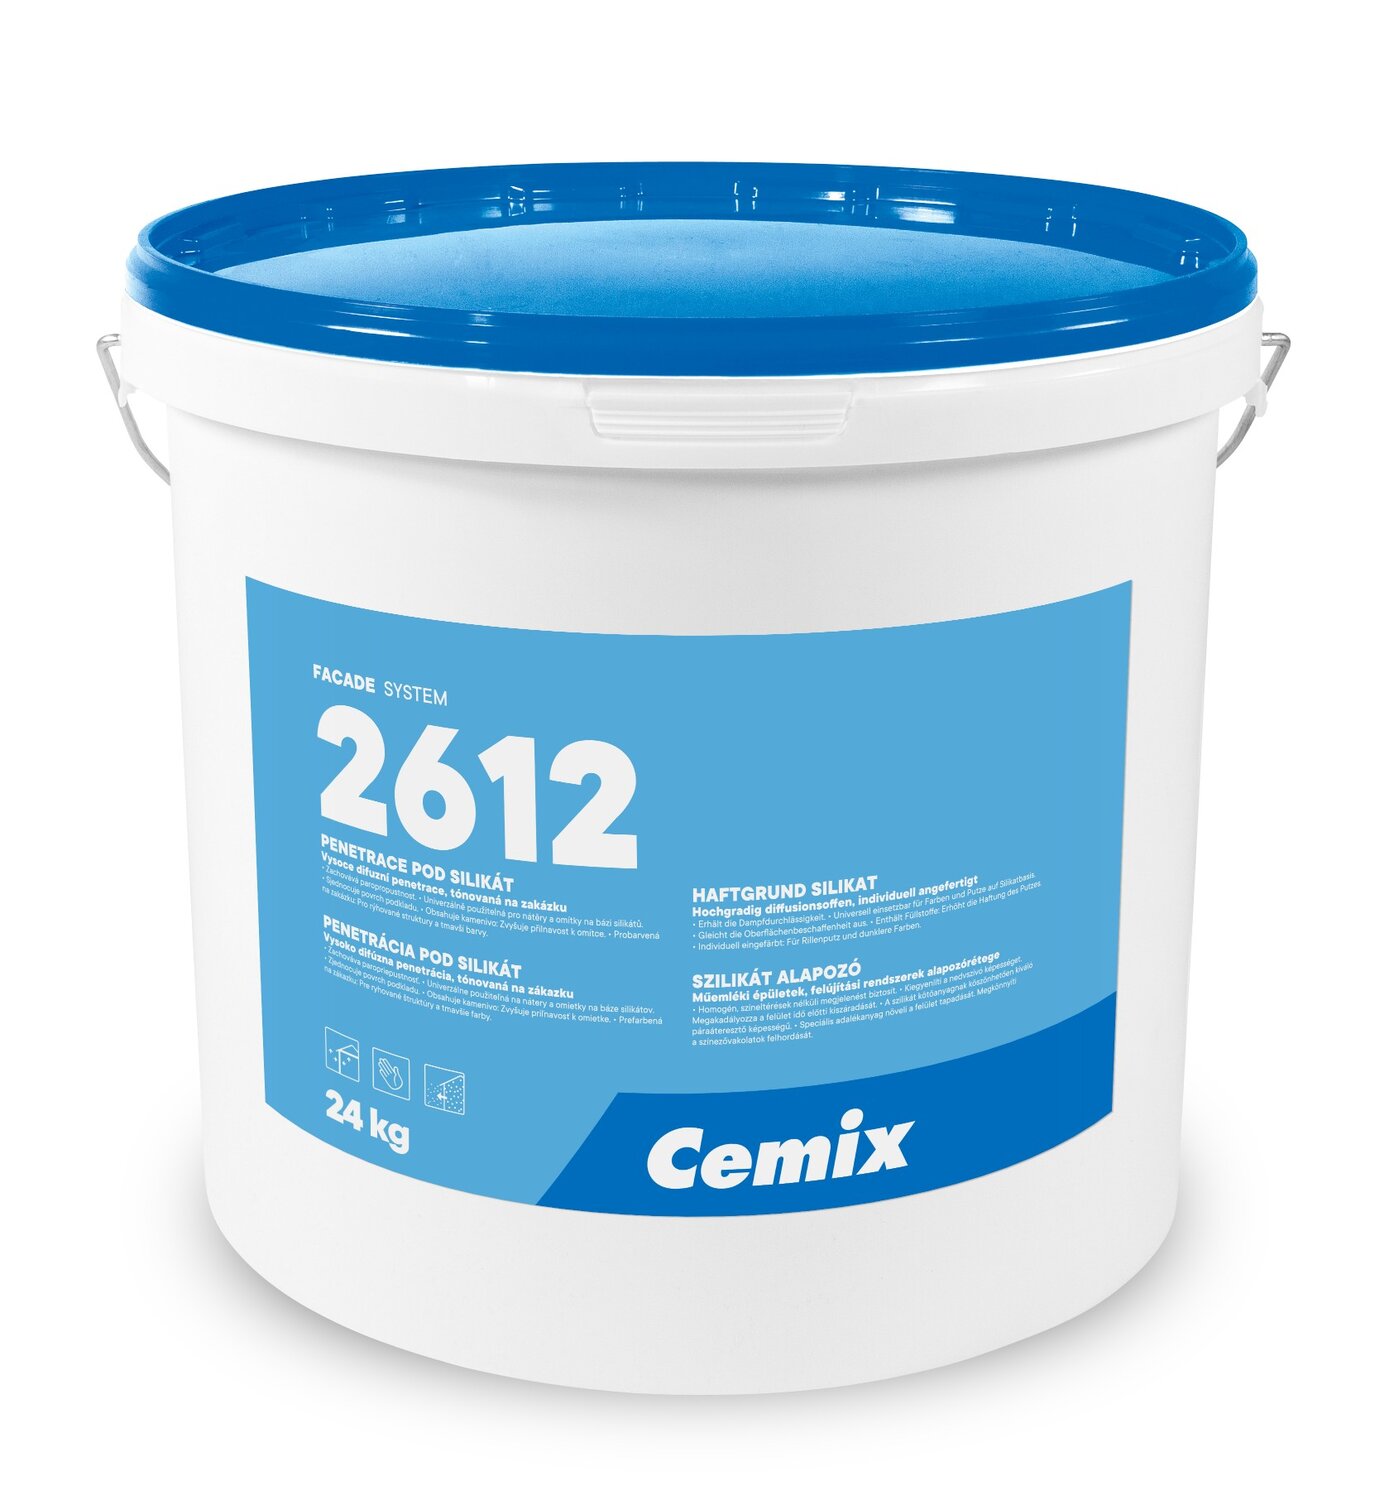 Penetrace pod silikát Cemix 2612 8 kg Cemix